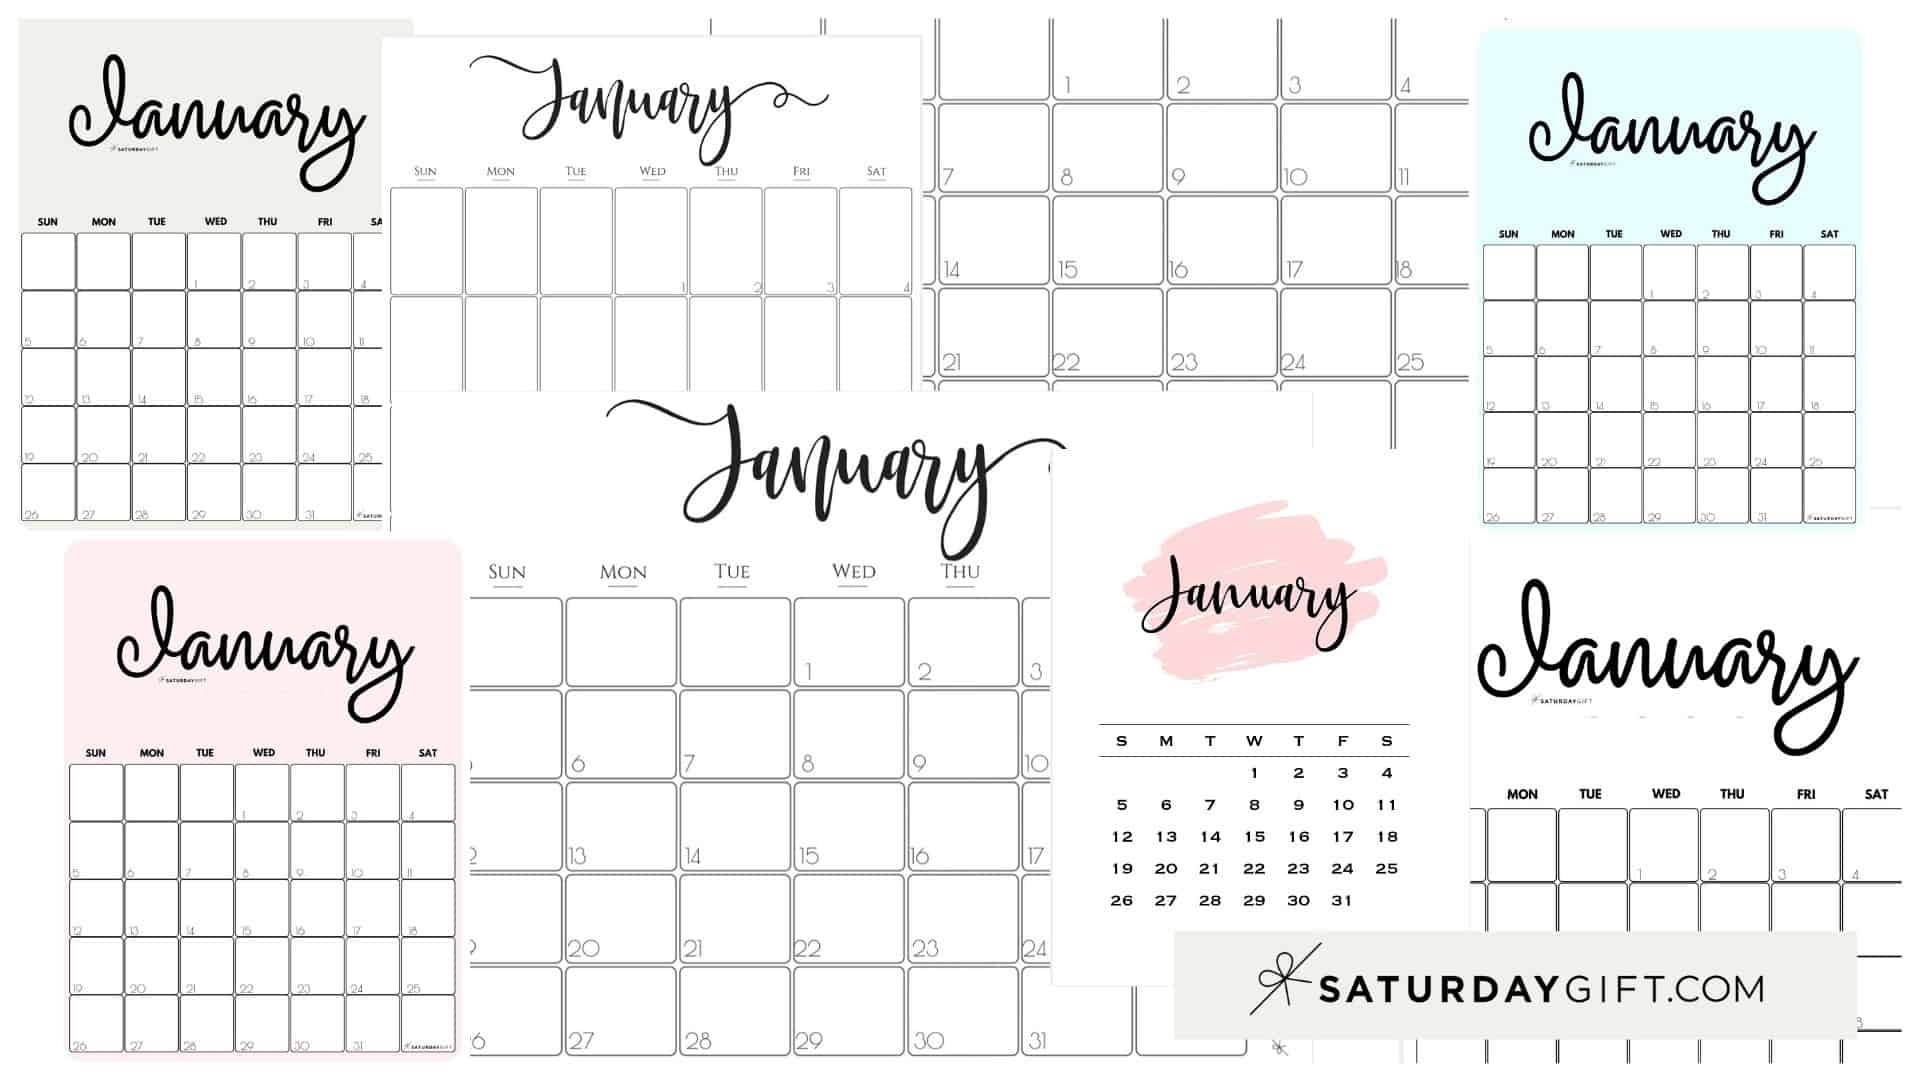 Catch January 2021 Calendar Printable Org